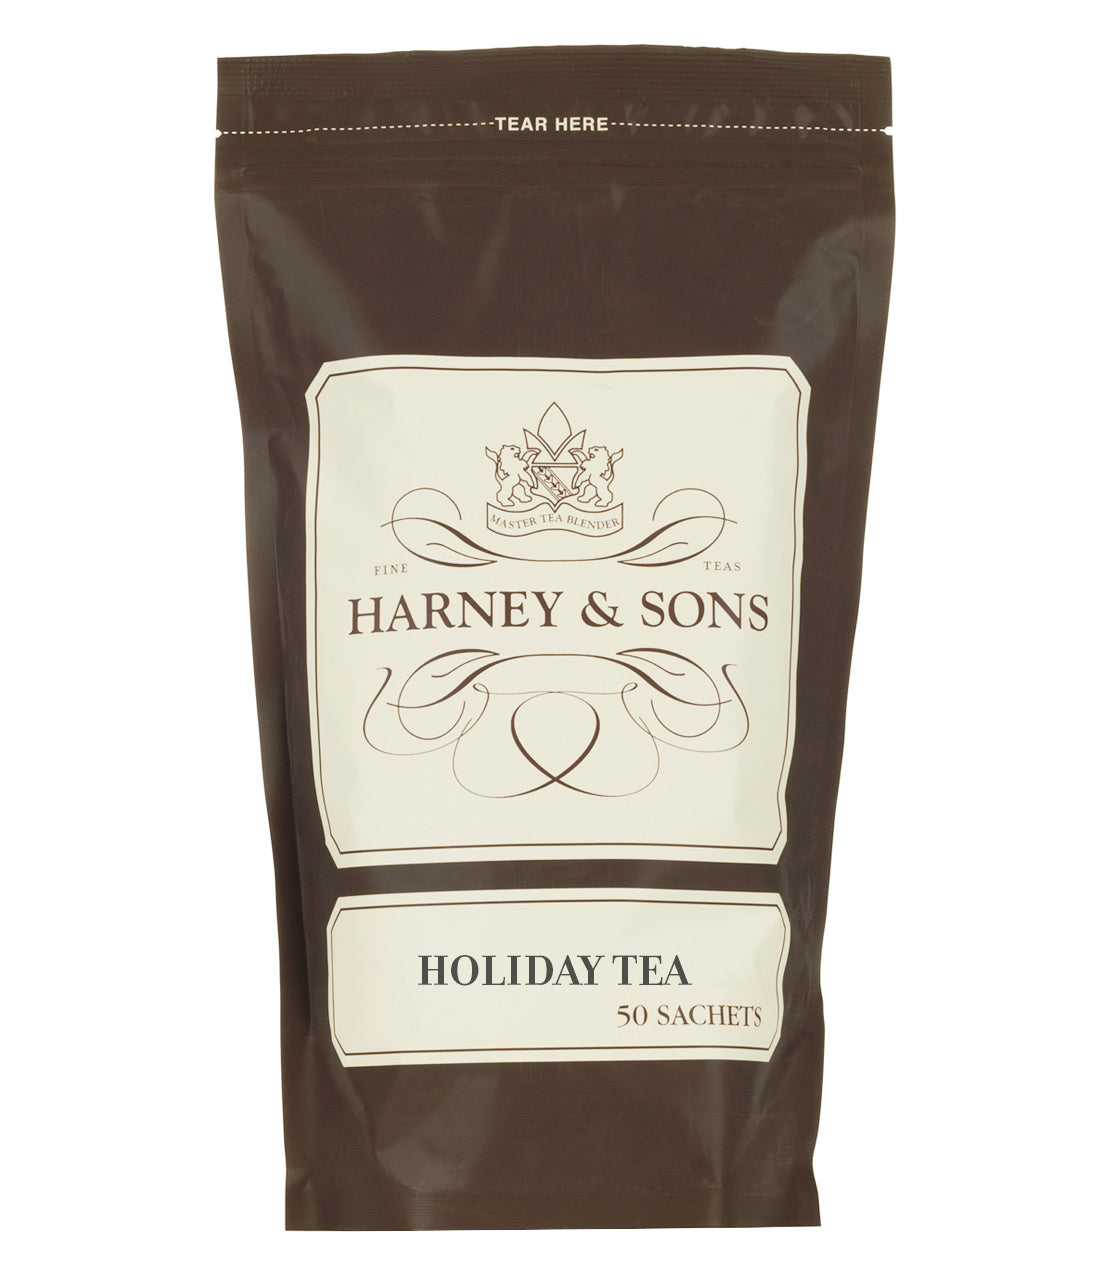 Holiday Tea - Sachets Bag of 50 Sachets - Harney & Sons Fine Teas